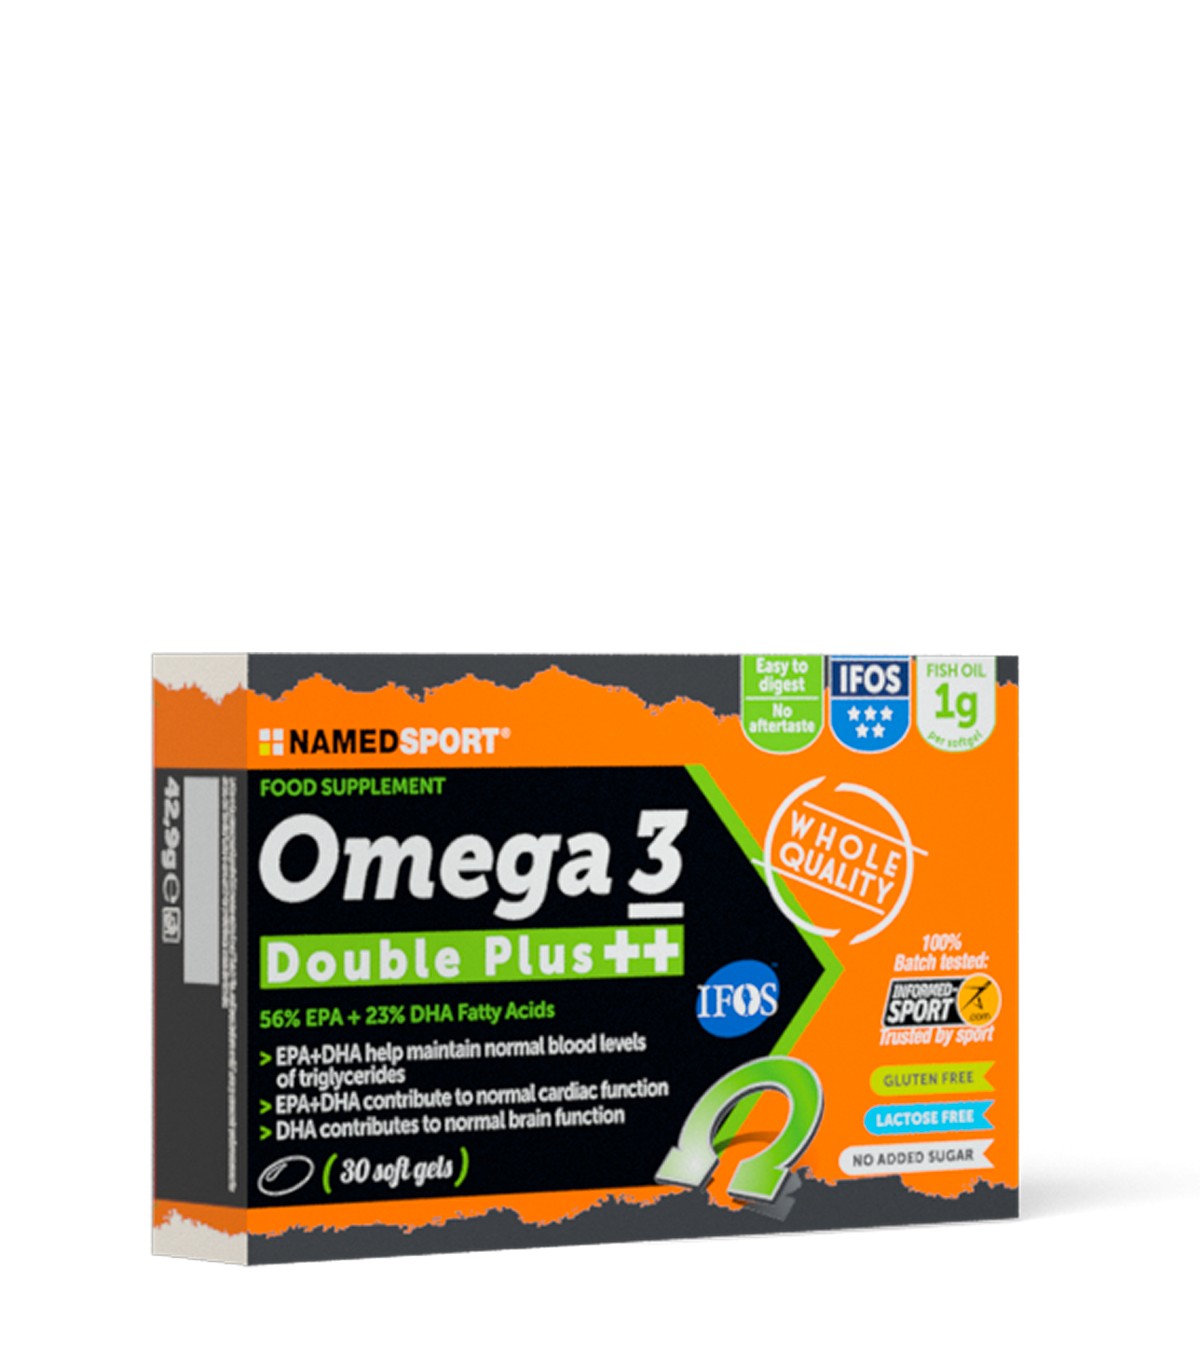 Named Sport Omega Double Plus ++ 60 soft gel